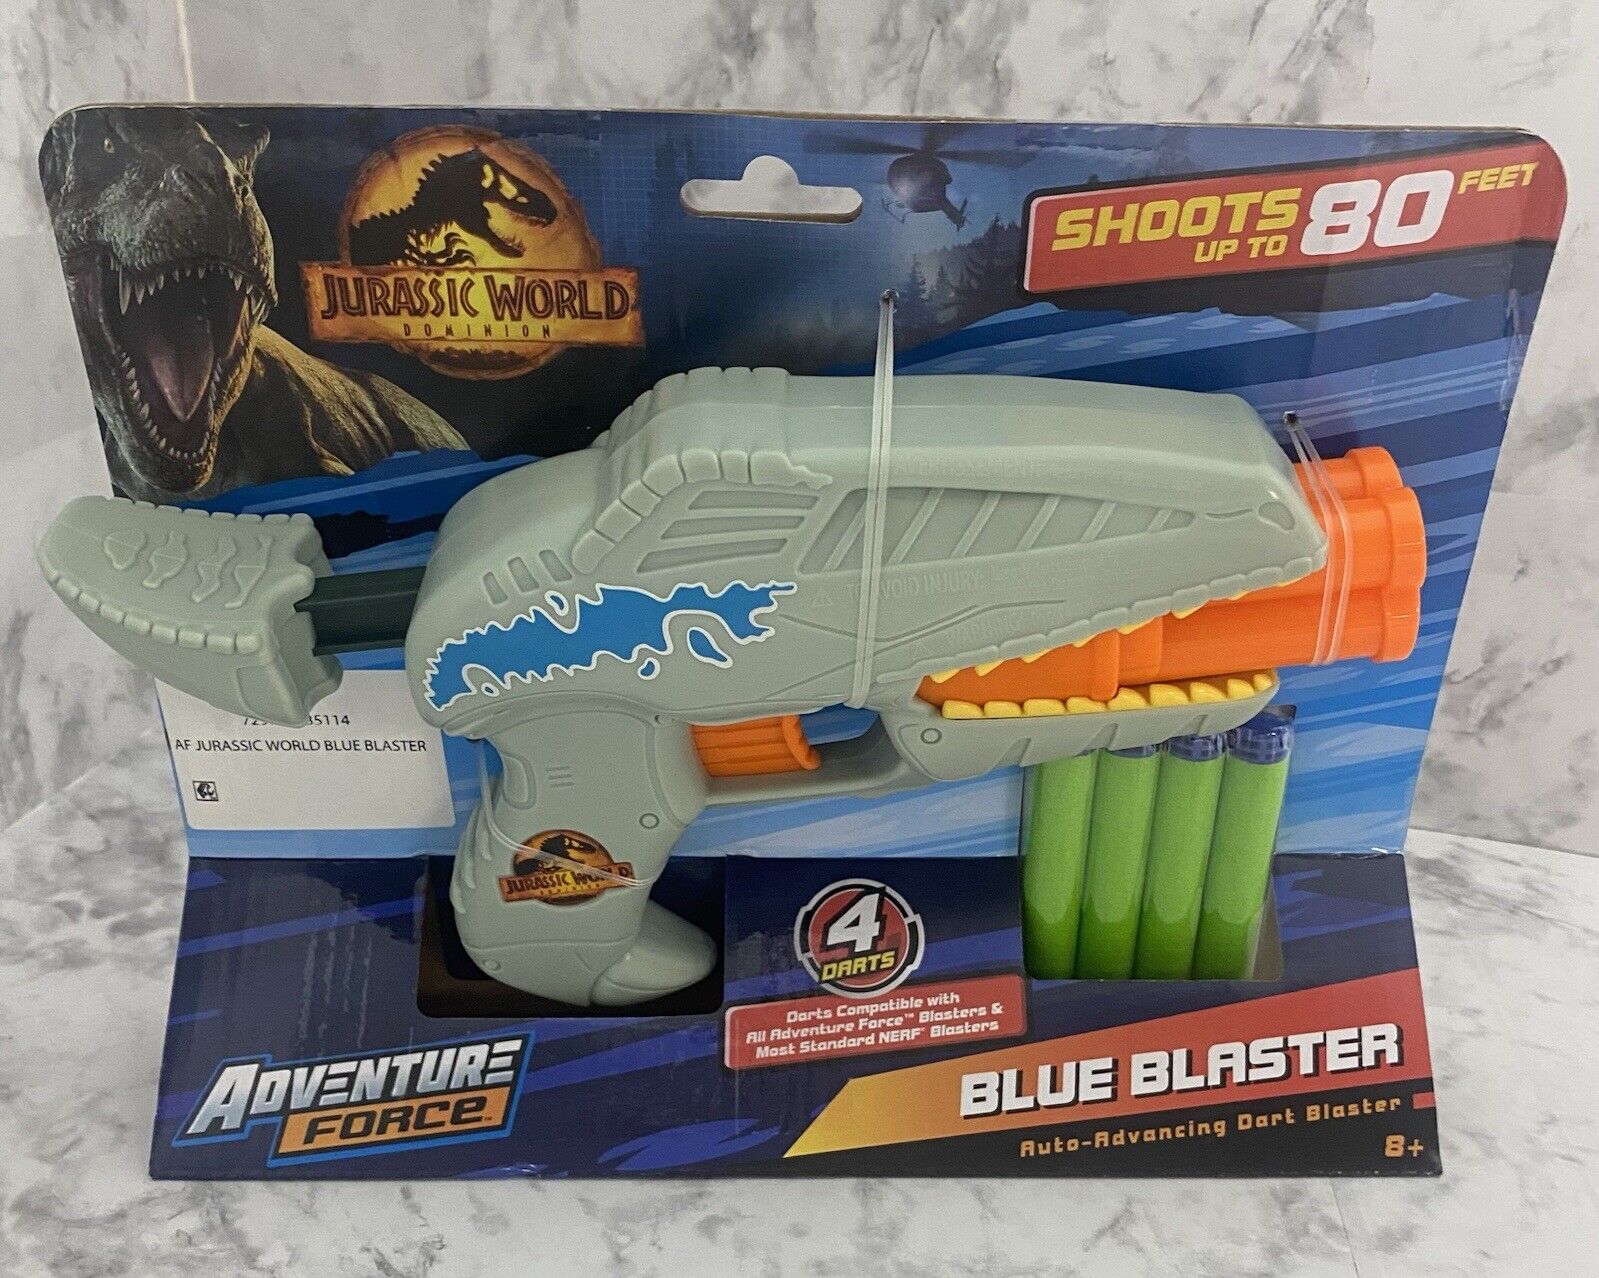 Jurassic Park World Adventure Force Blue Blaster NIP Foam Dart Gun